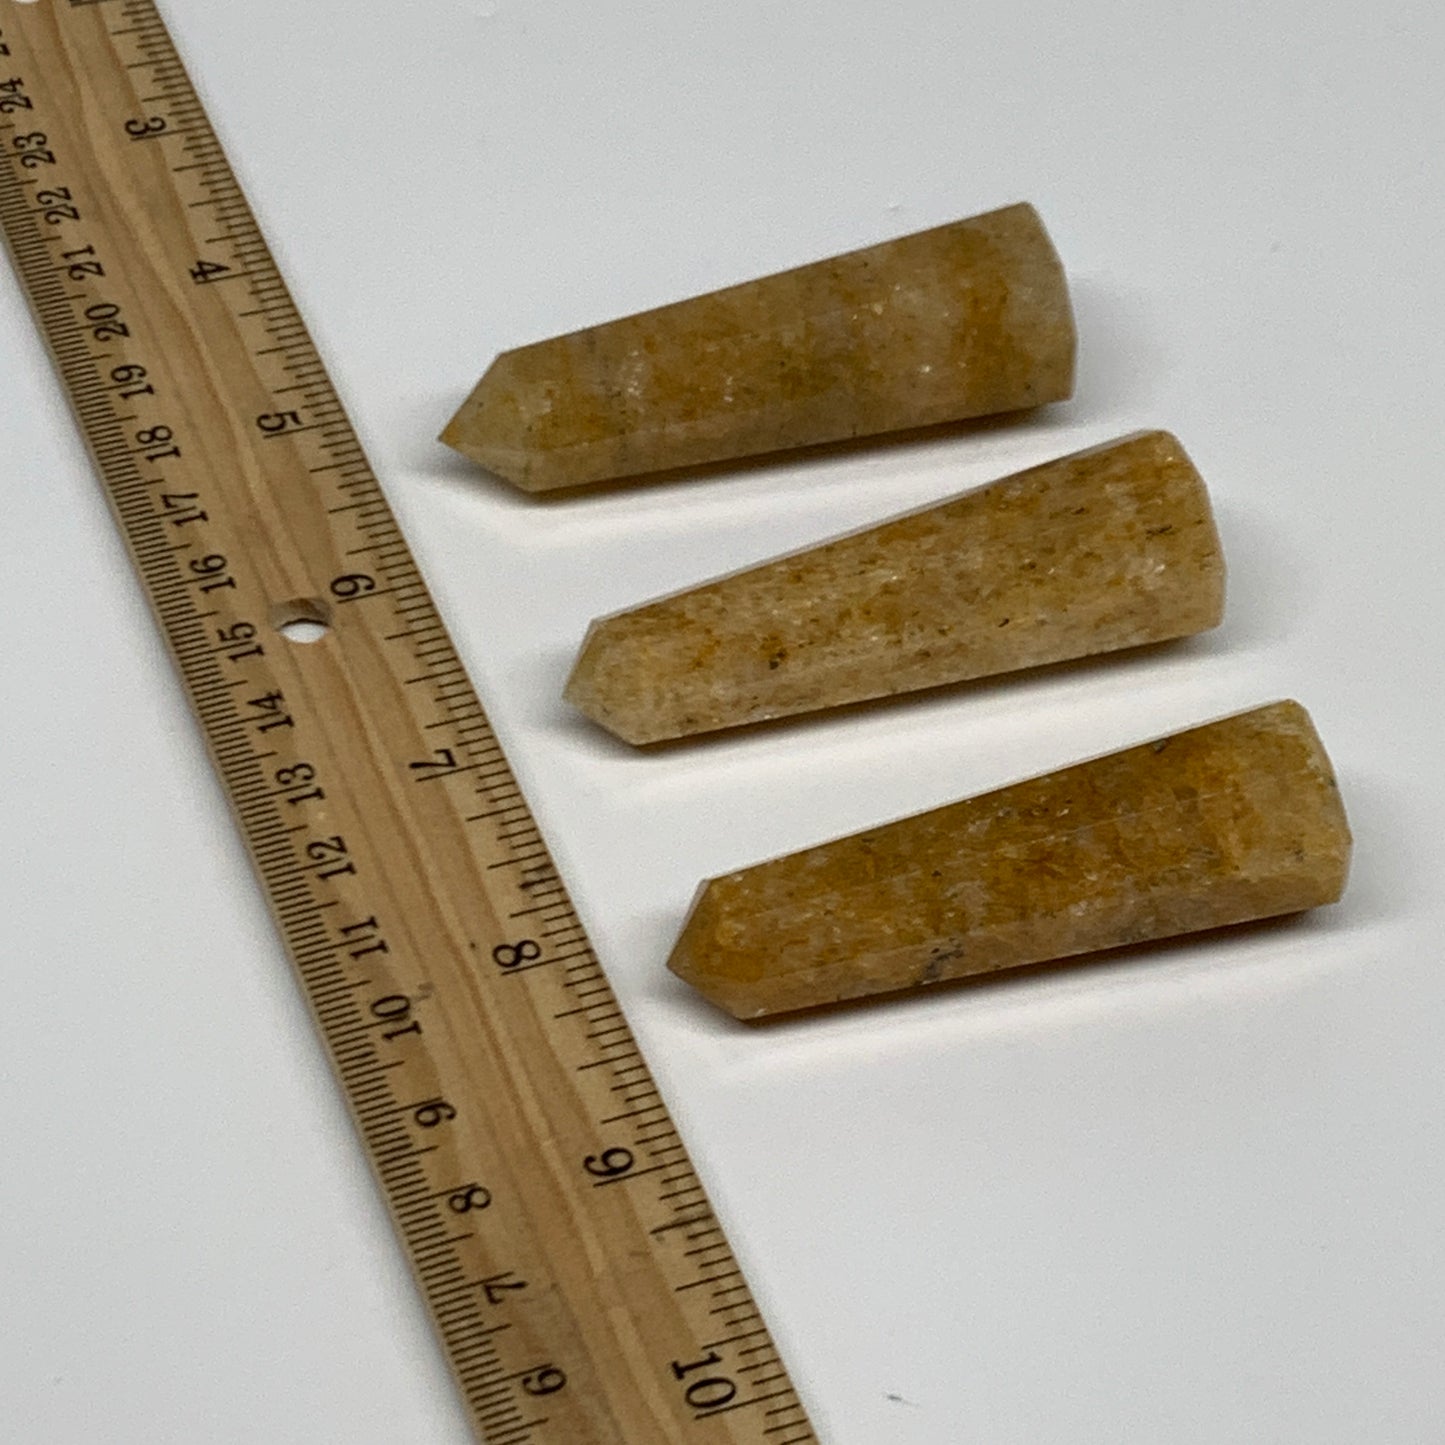 111.3g, 2.4"-2.5", 3pcs, Natural Golden Quartz Towers Small Polished Crystal, B3